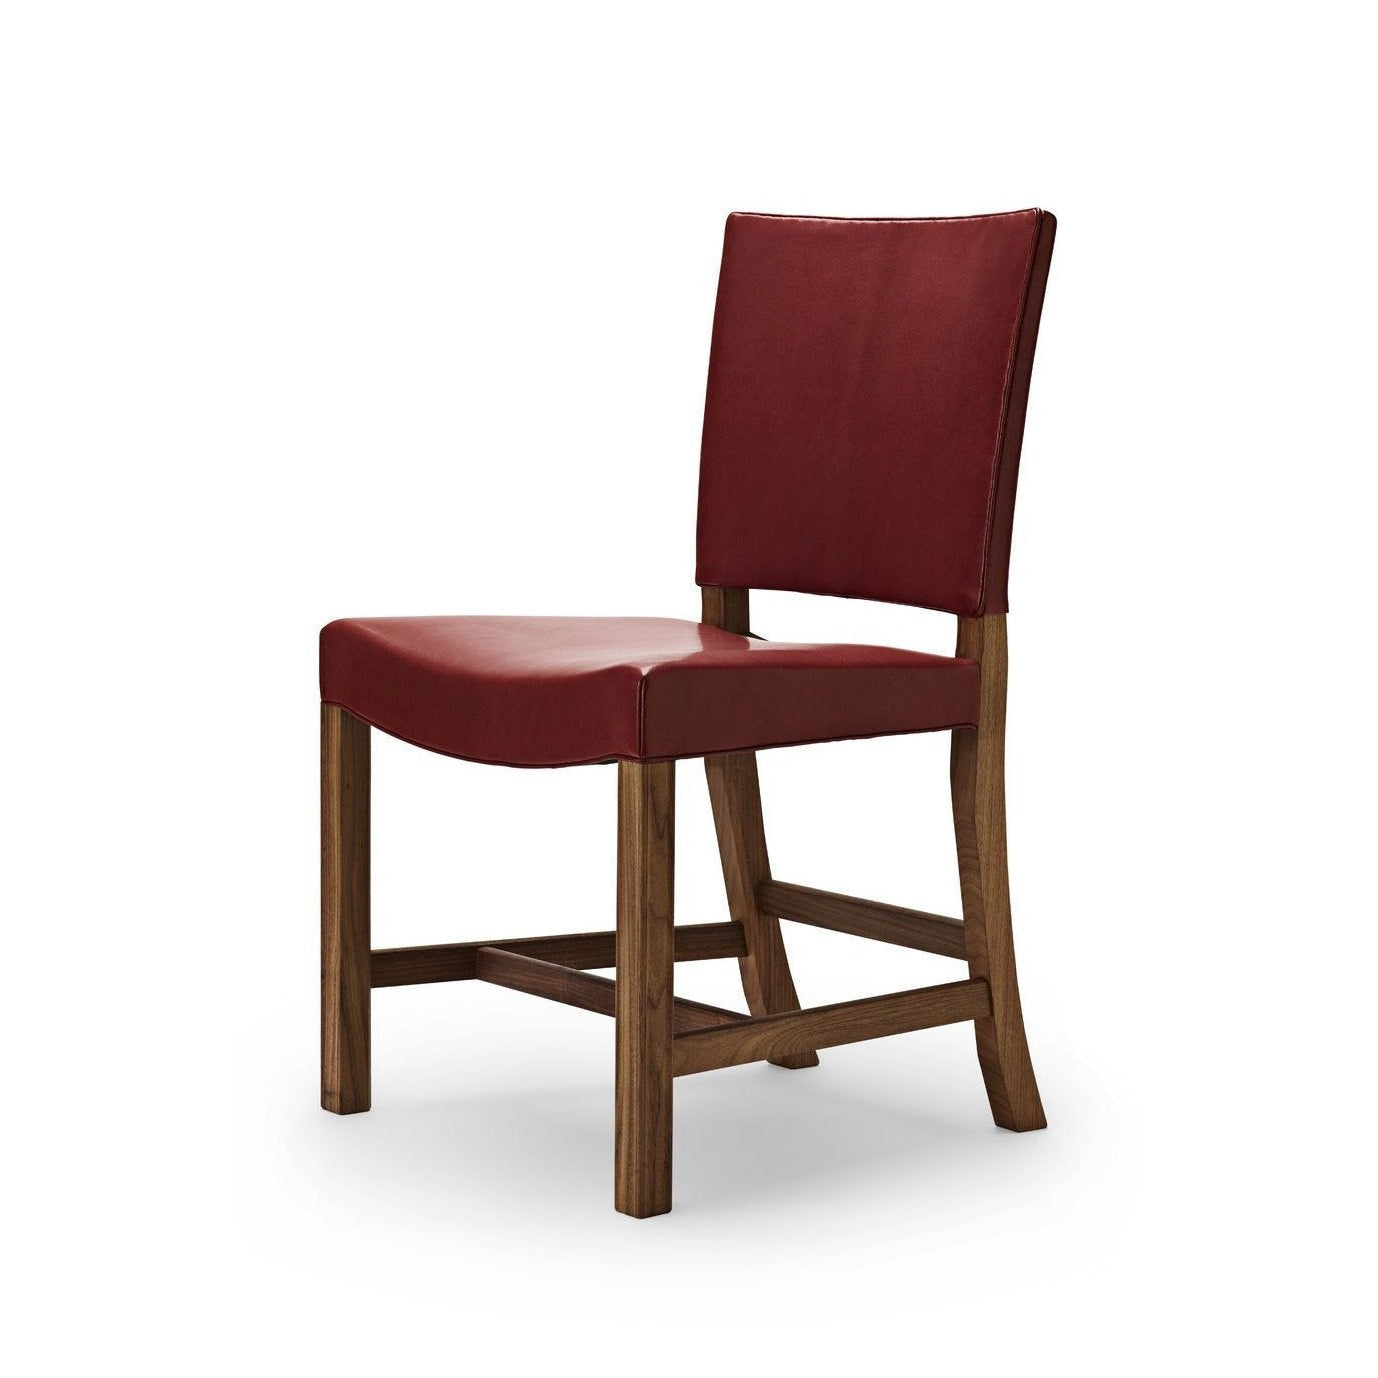 Carl Hansen Kk47510 The Red Chair, Lacquered Walnut/Red Goatskin